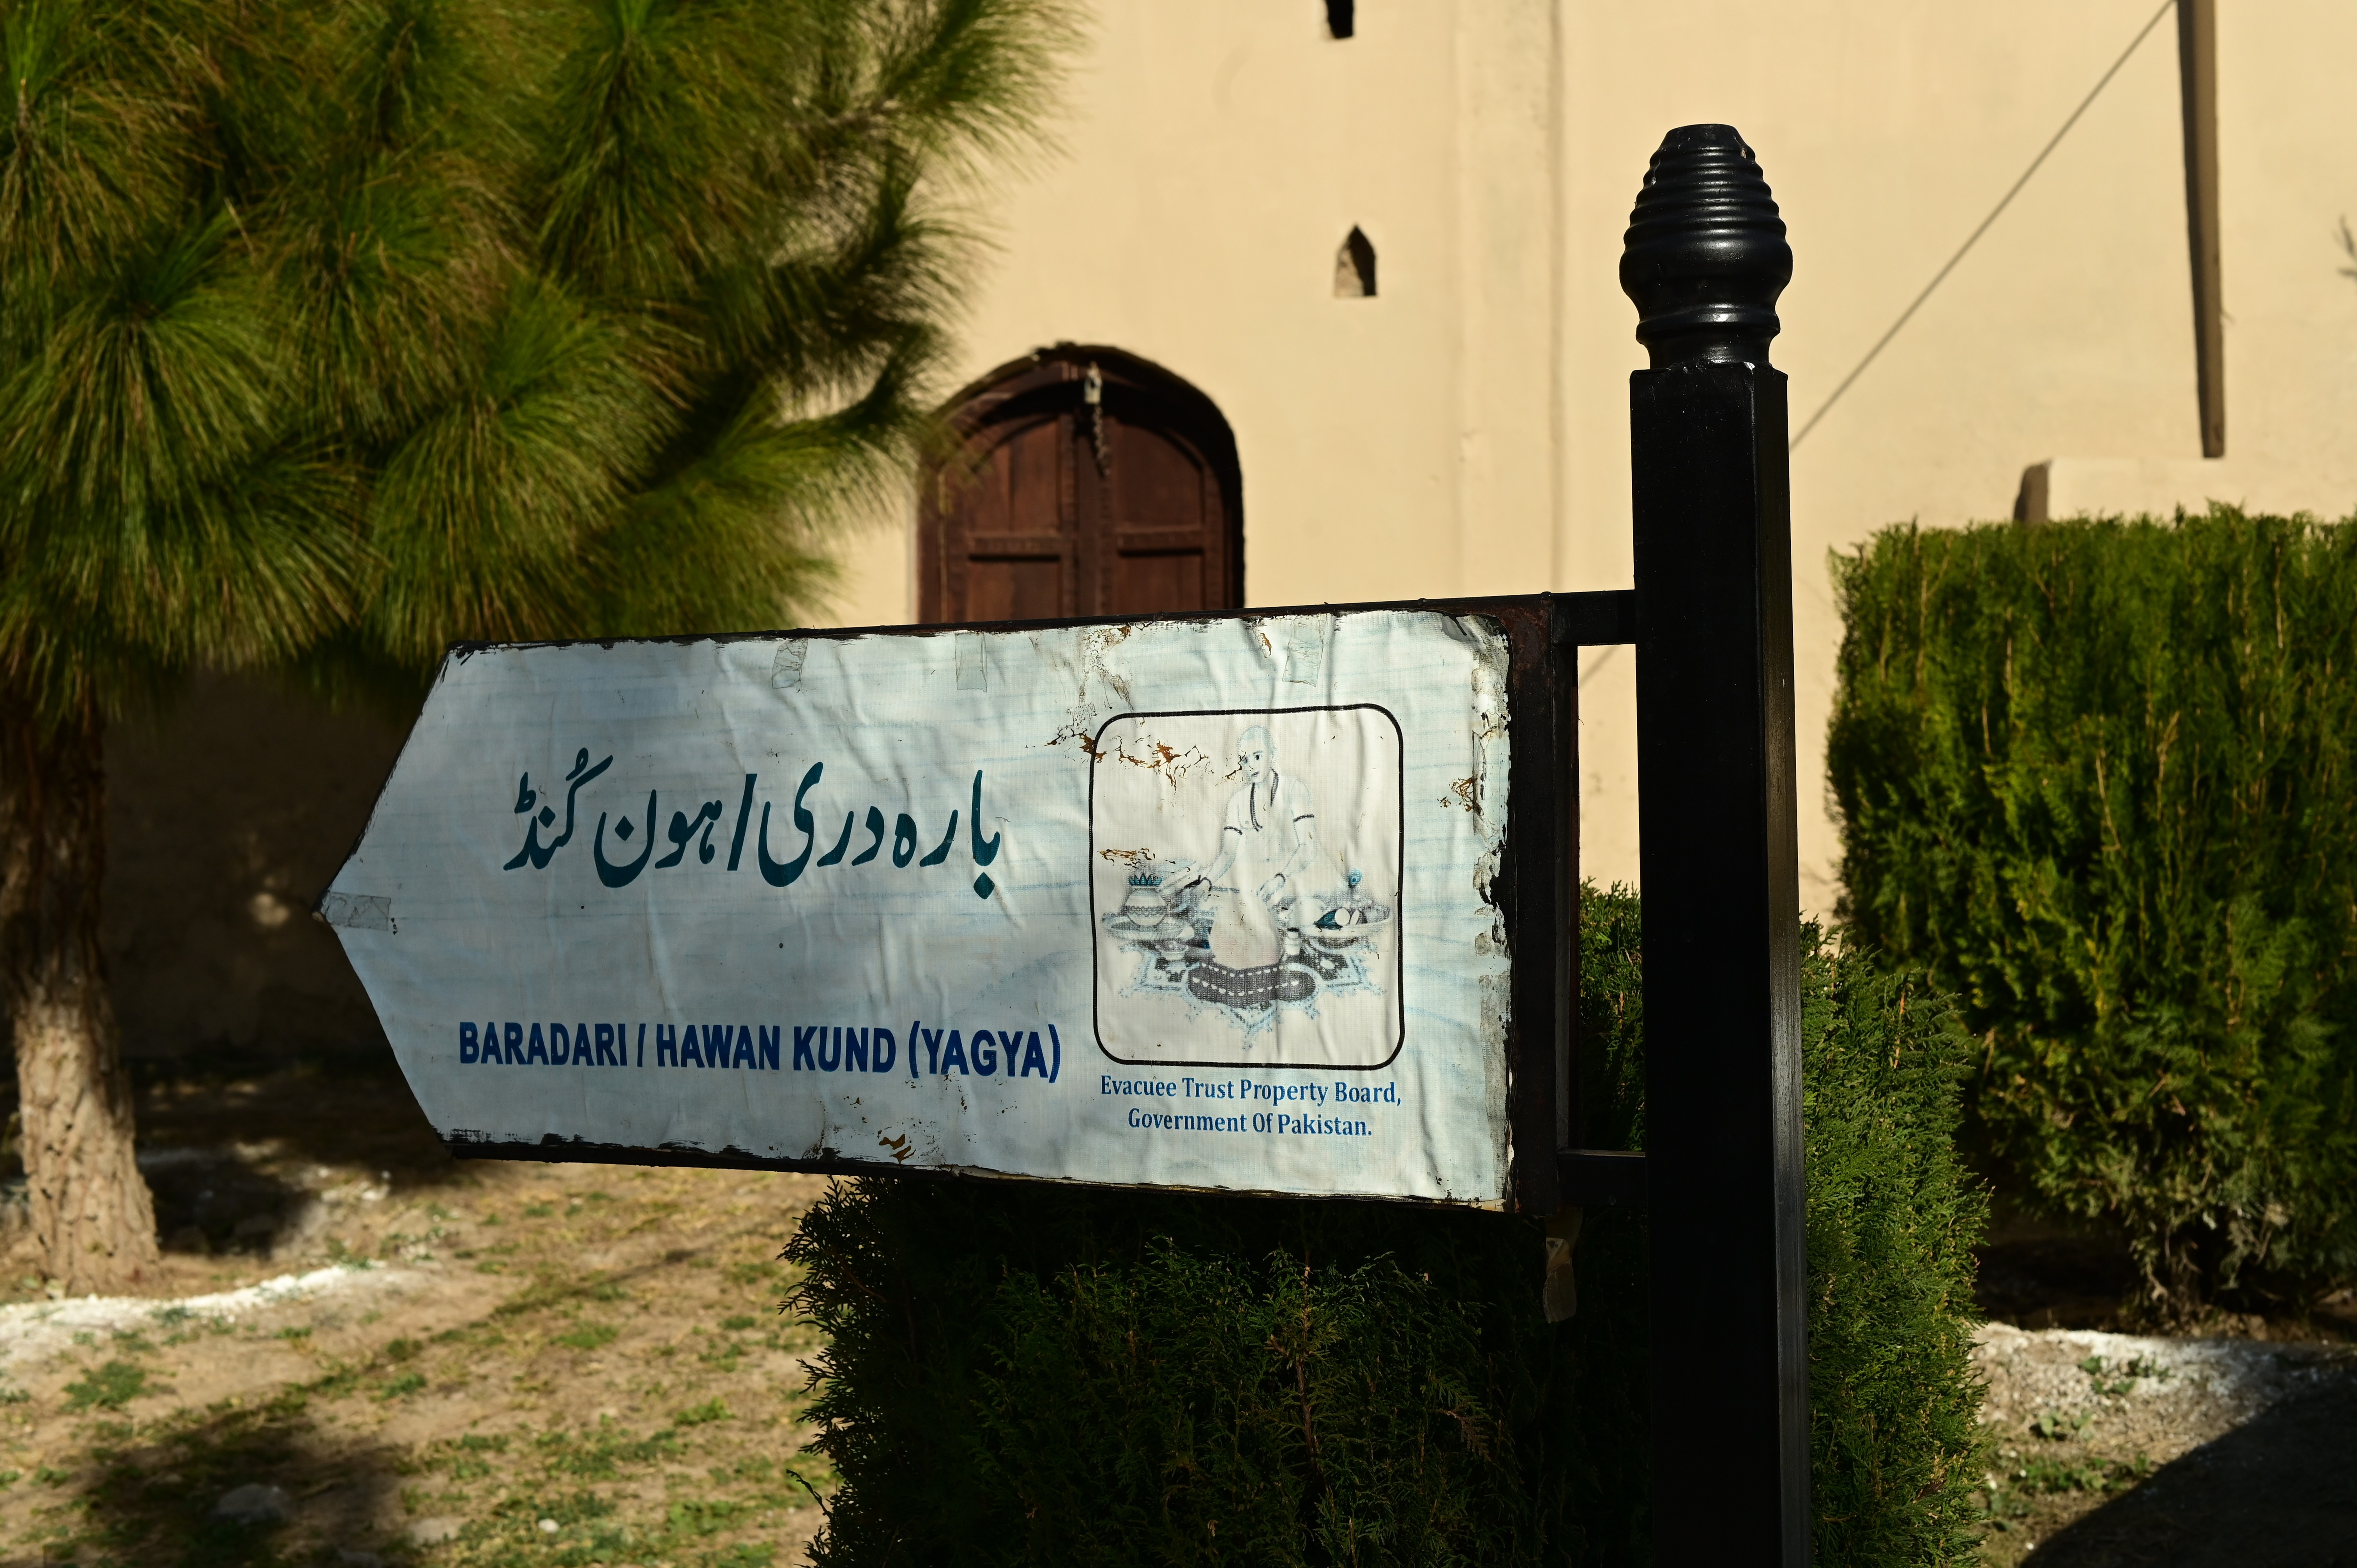 The Direction board indicating the location of Baradari/ Hawan Kund